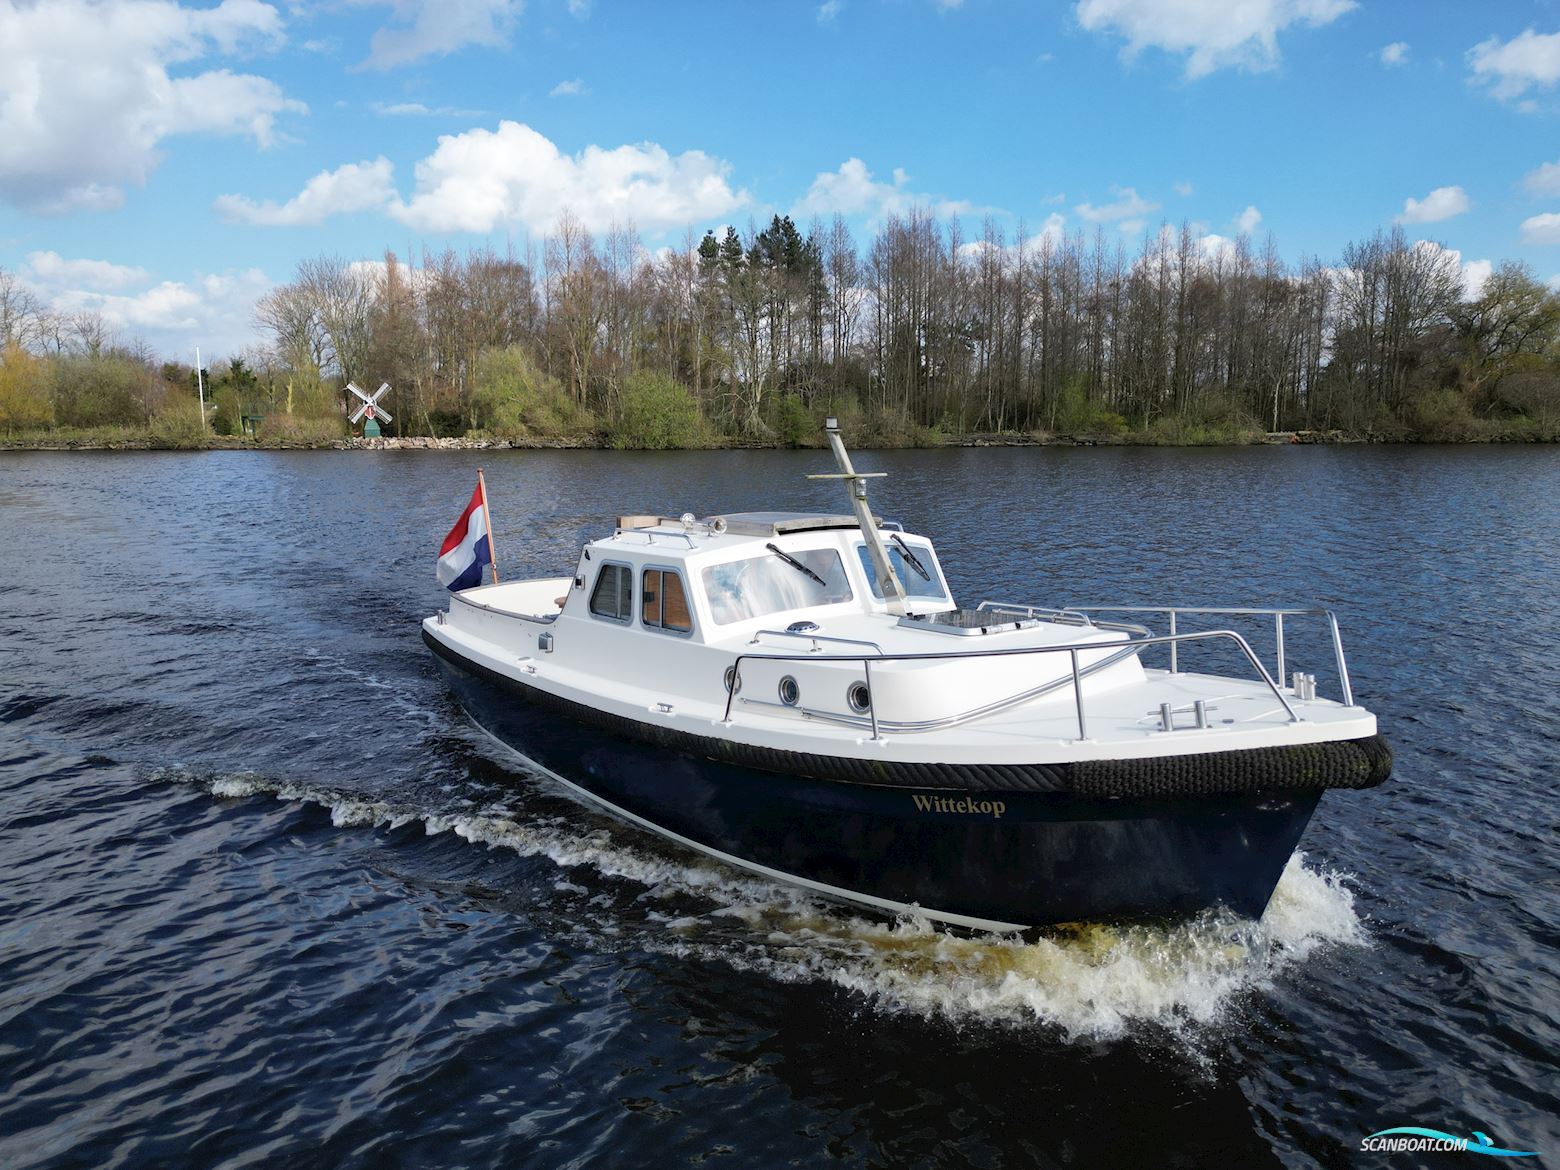 Onj - Loodsboot 770 Motorboot 2001, mit Vetus motor, Niederlande